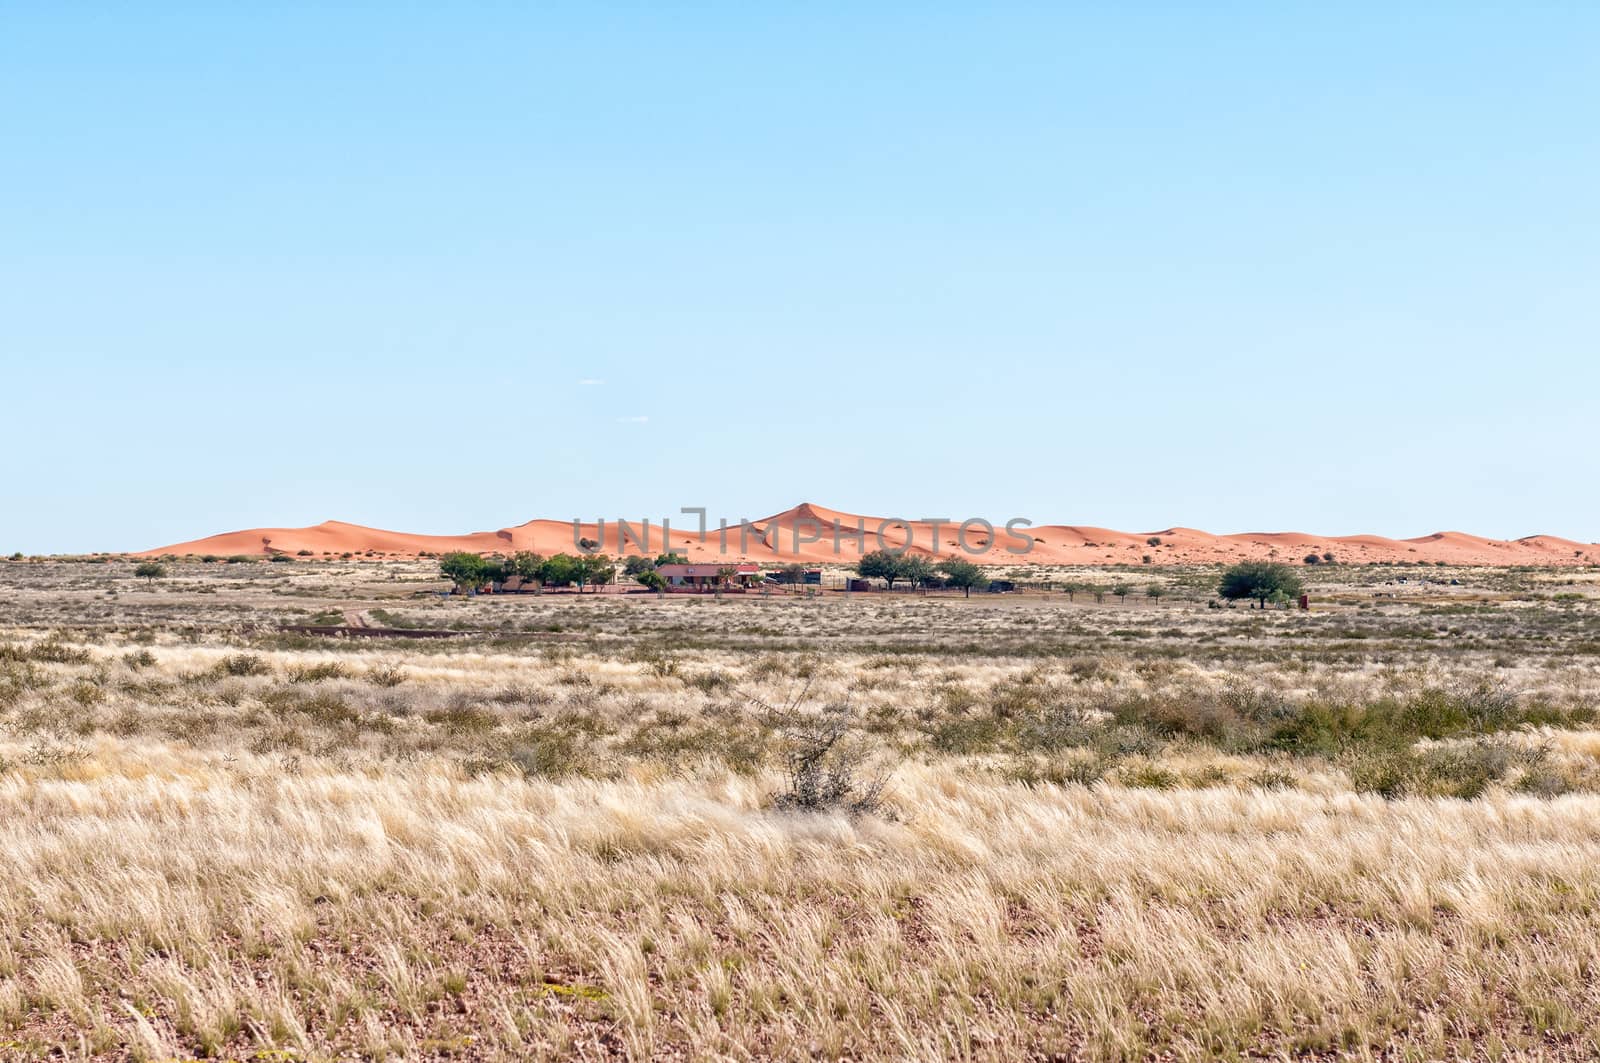 Farm scene, with sand dunes, in the Kalahari Desert of Namibia by dpreezg